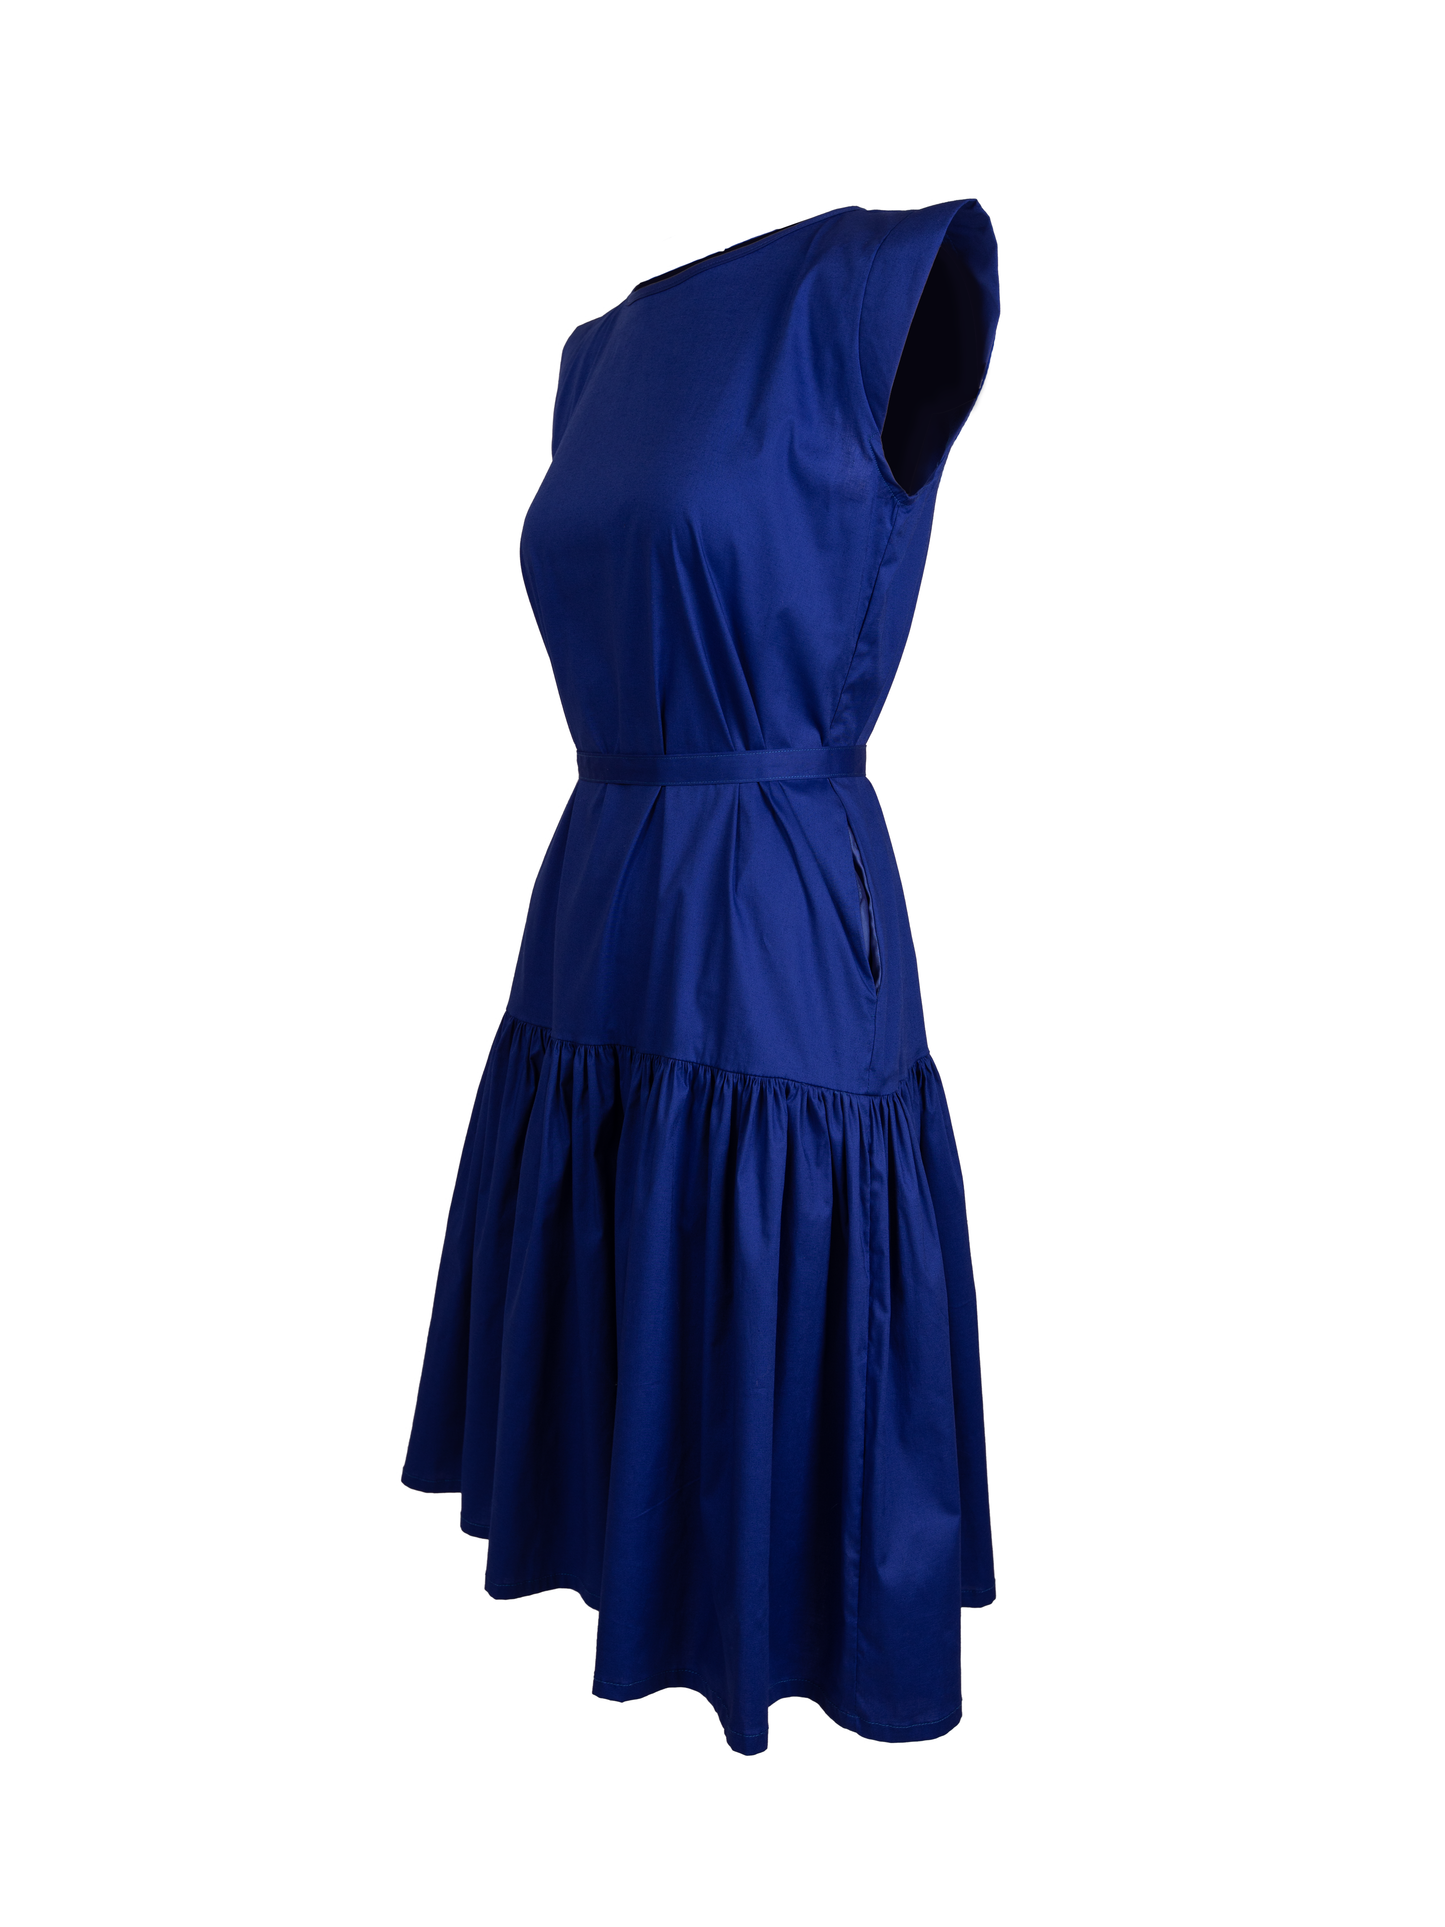 GUILLOTINE Royal Blue Frill Dress